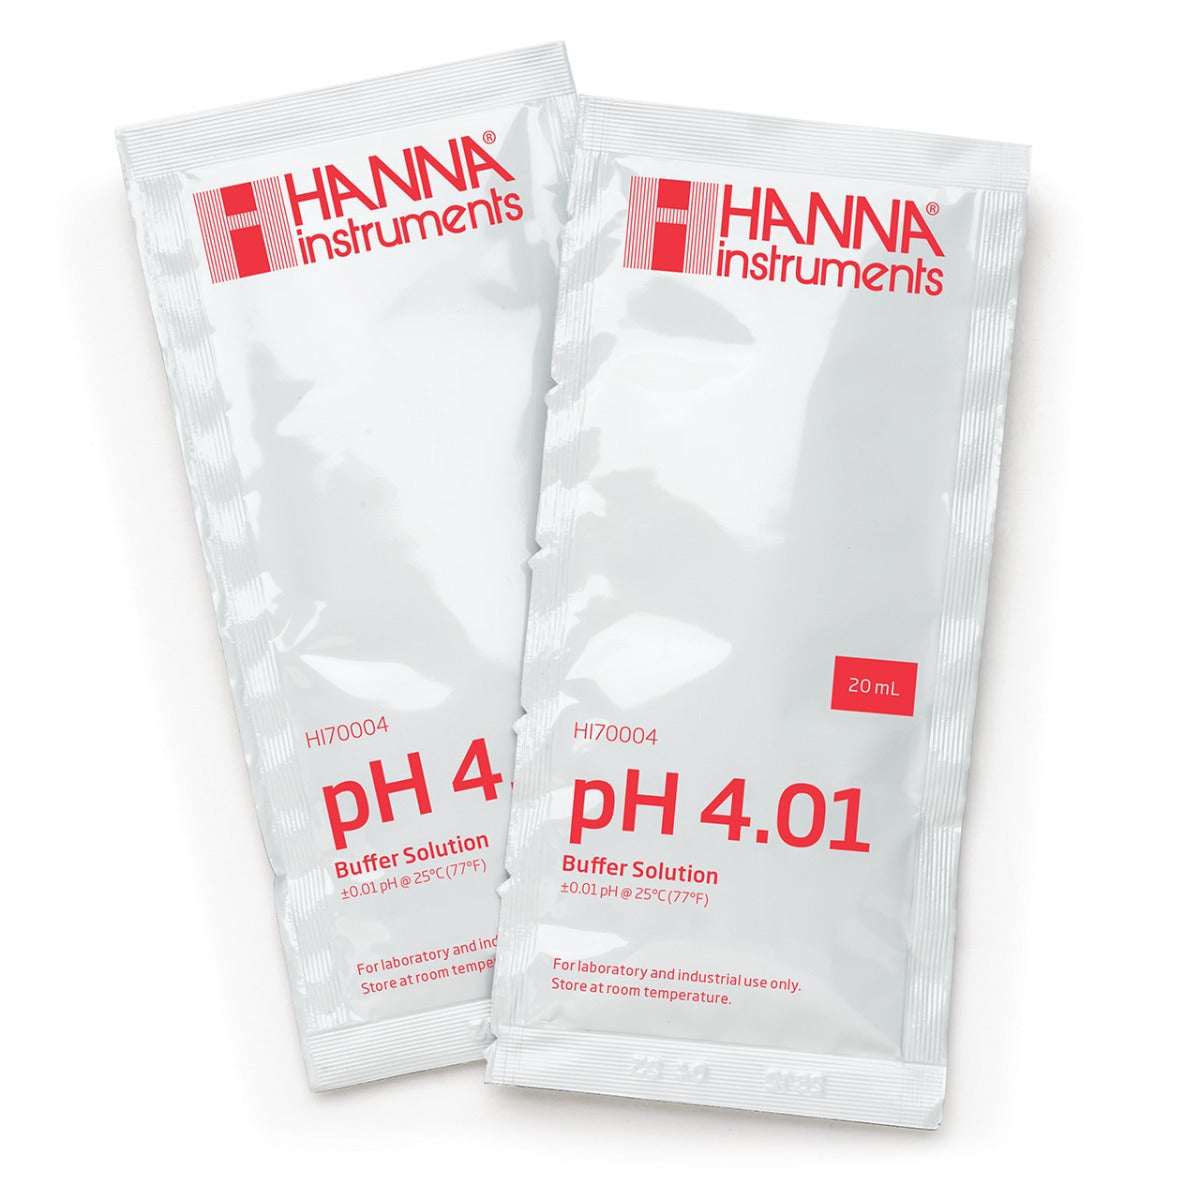 Hanna pH 4.01 Calibration Buffer Sachet (20 mL) - HI70004